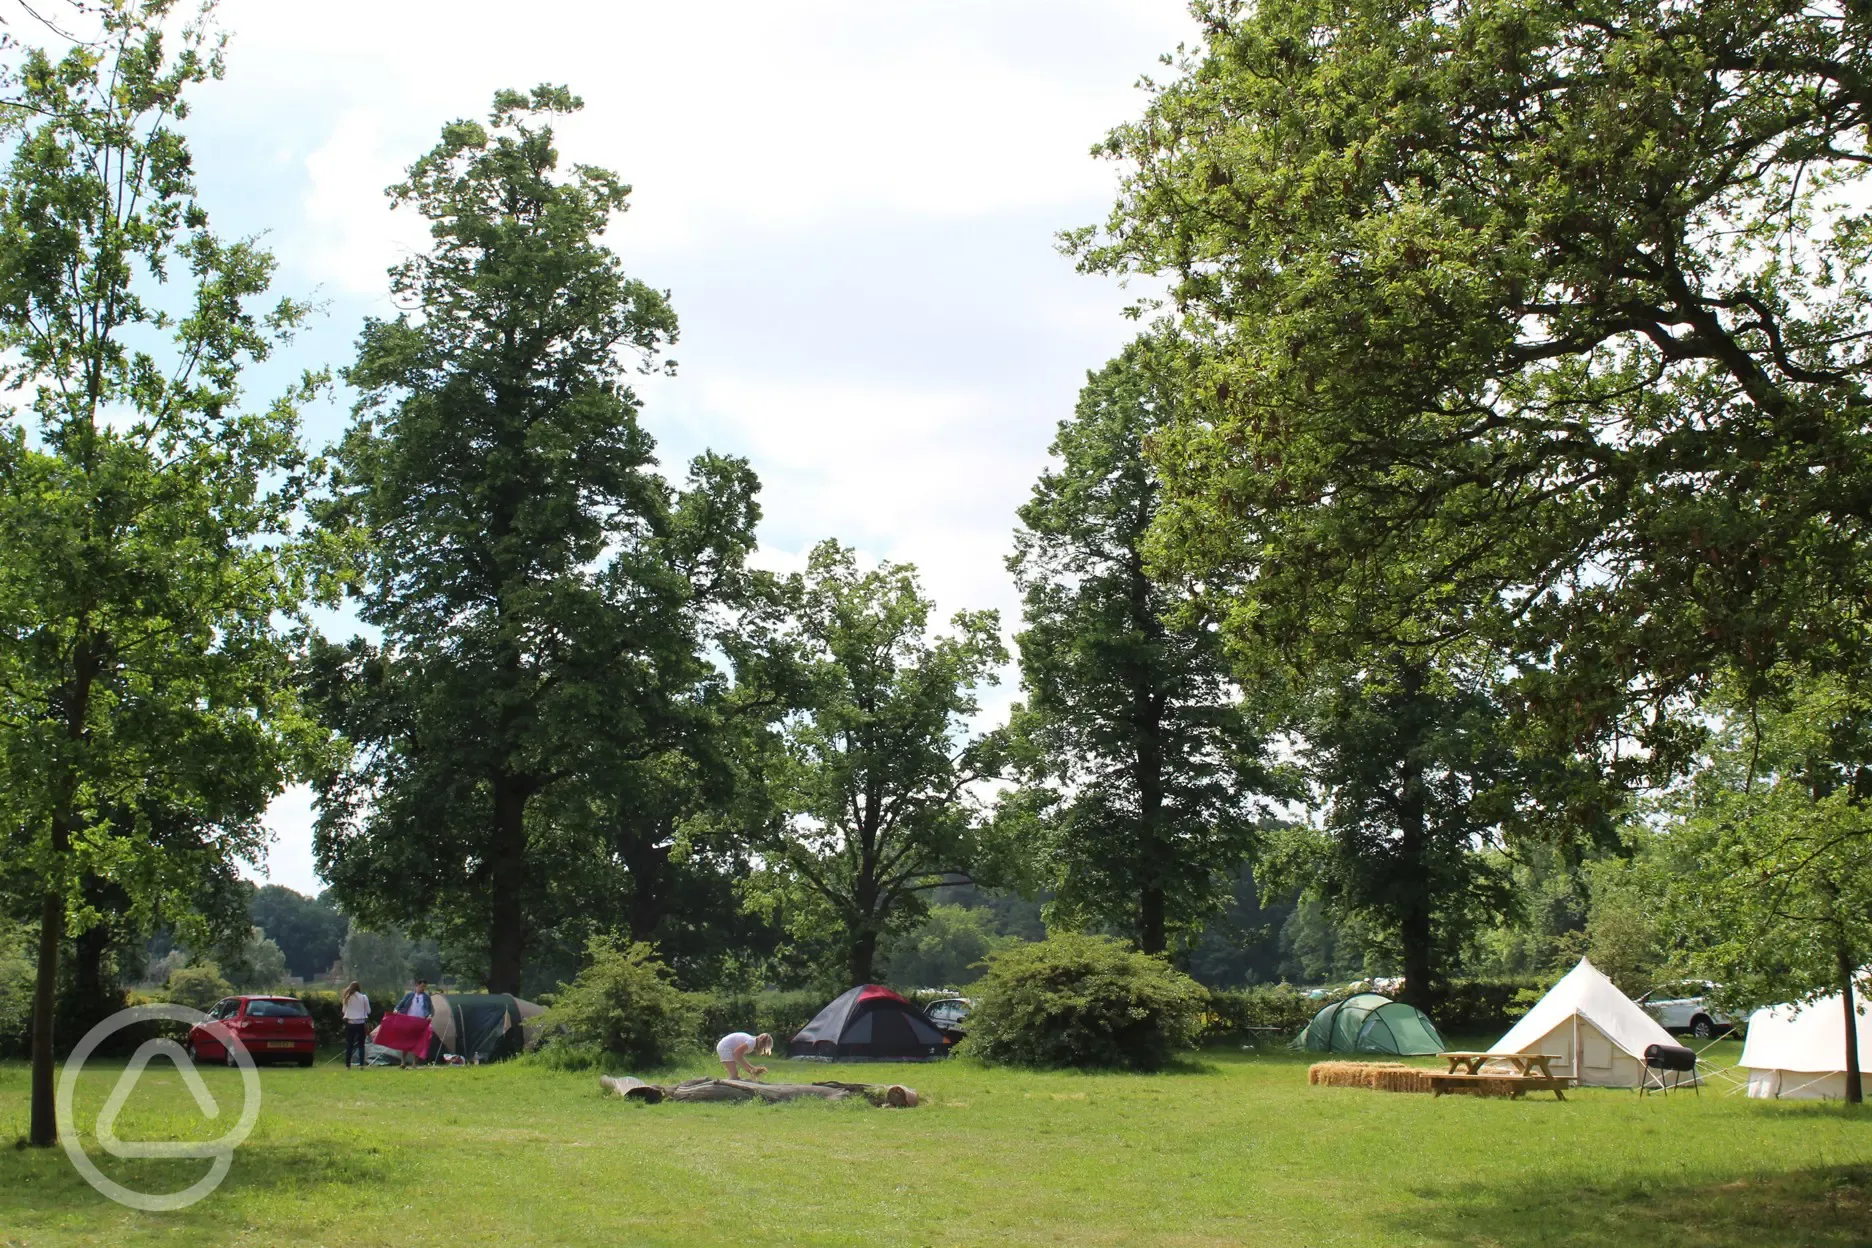 Glamping and camping at Aldenham Country Park